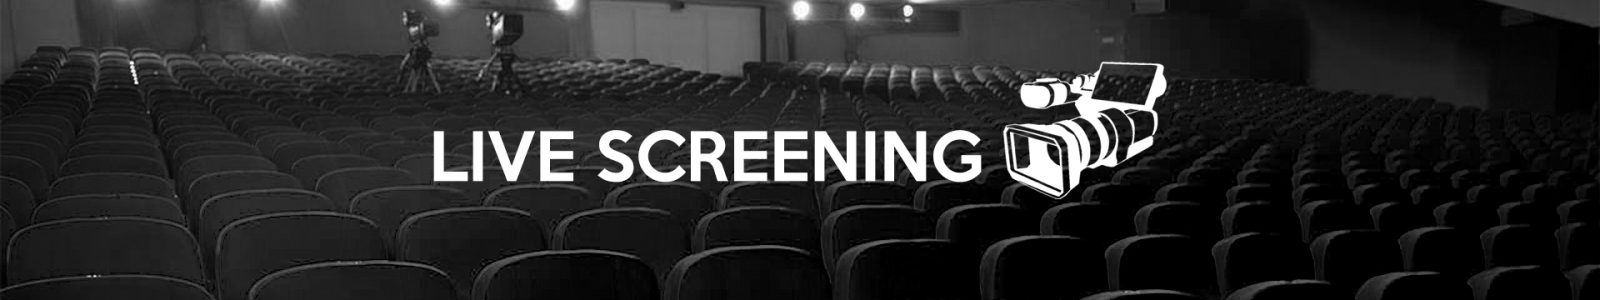 Cinema Live Screening